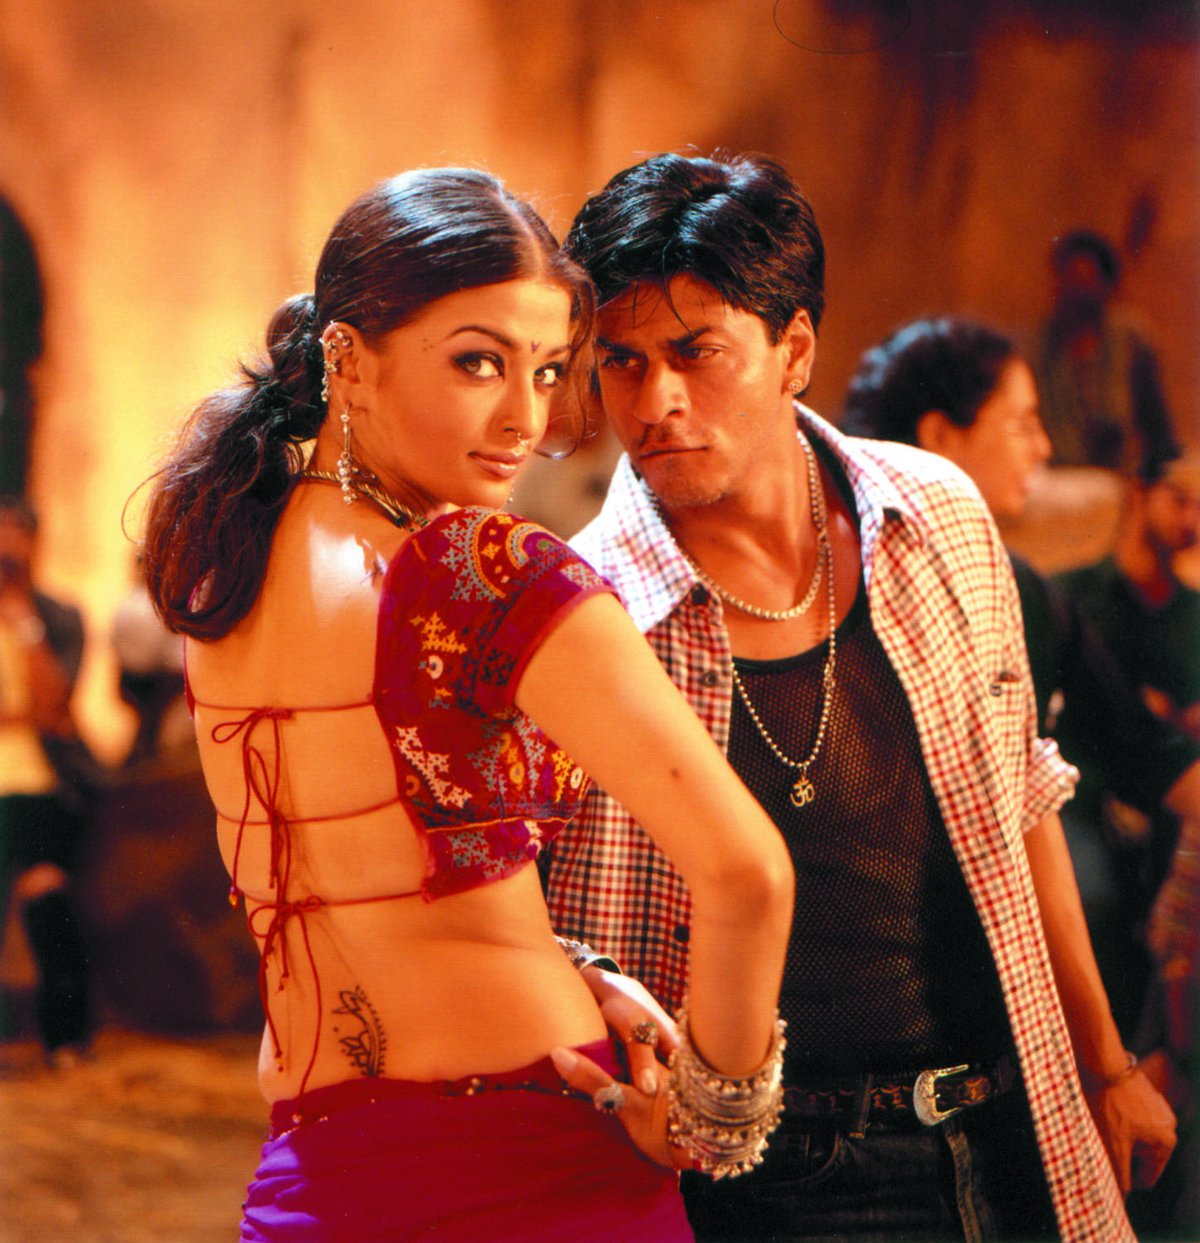 Текст болливуд. Shahrukh Khan 2002. Индия про любовь. Шахрукх Кхан.